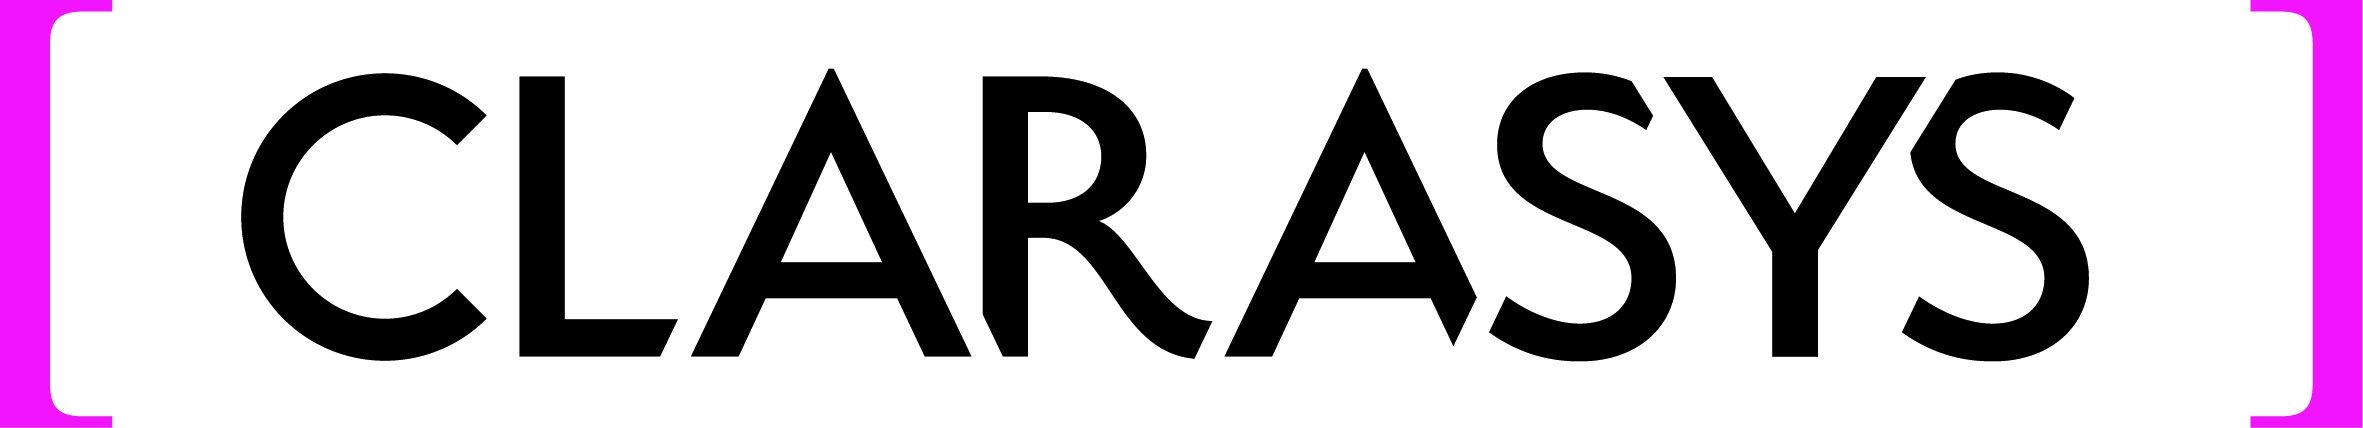 logo for Clarasys